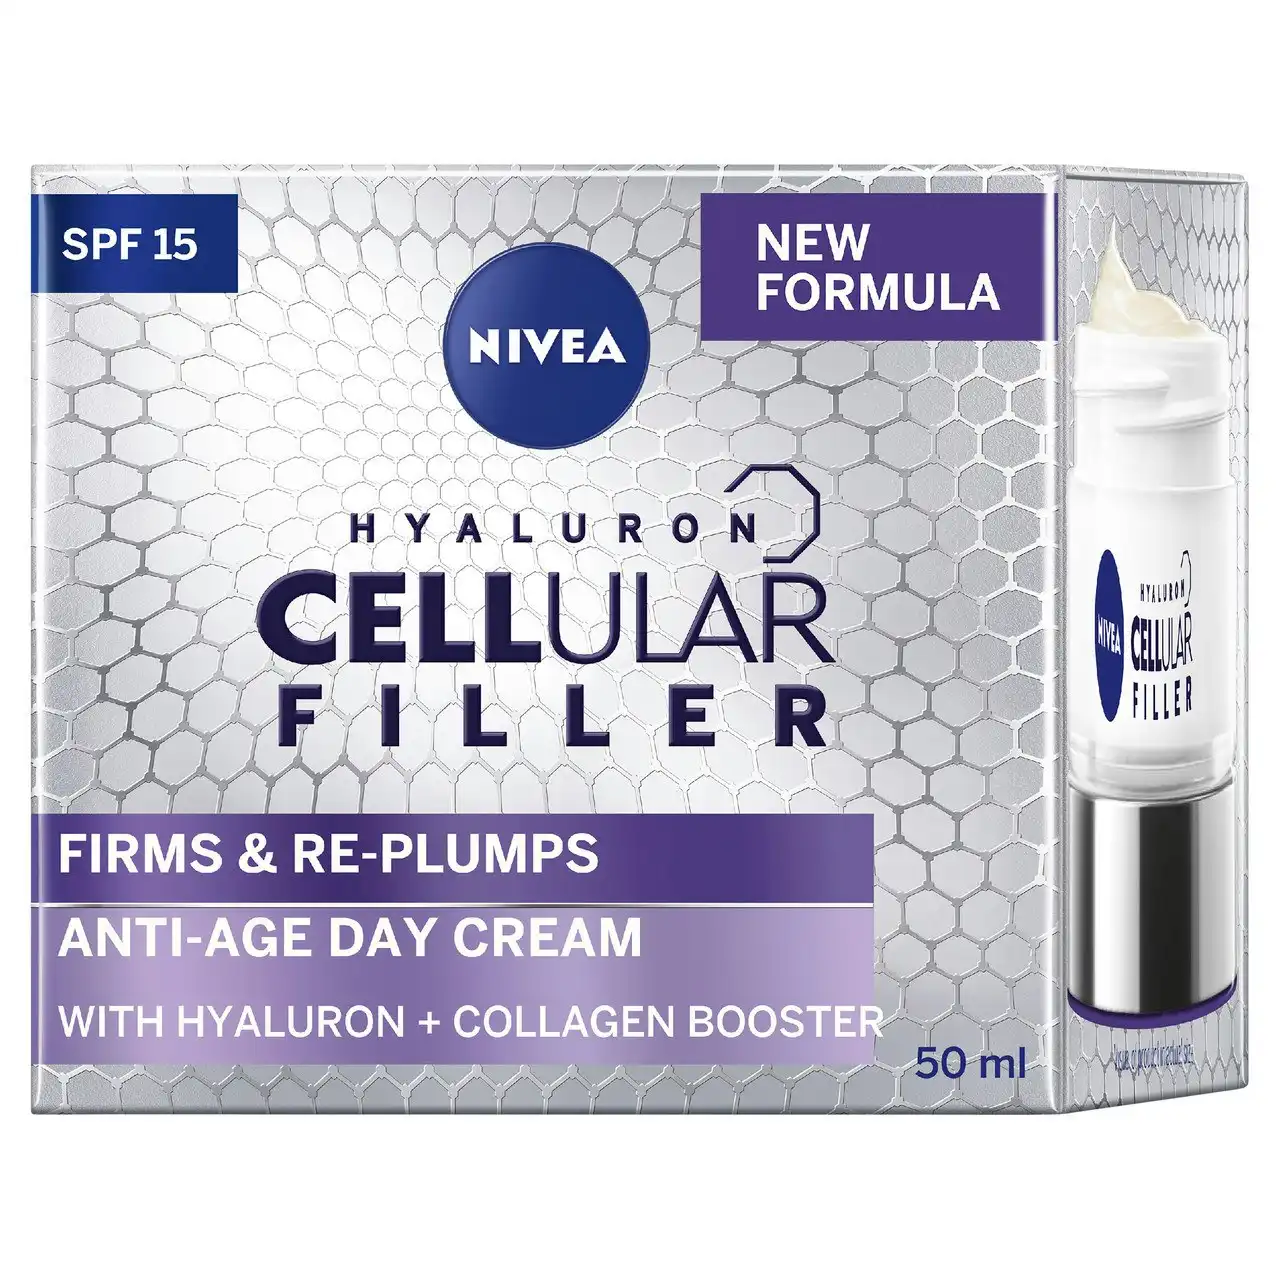 Nivea Cellular Filler Expert Anti-Age Day Cream SPF15